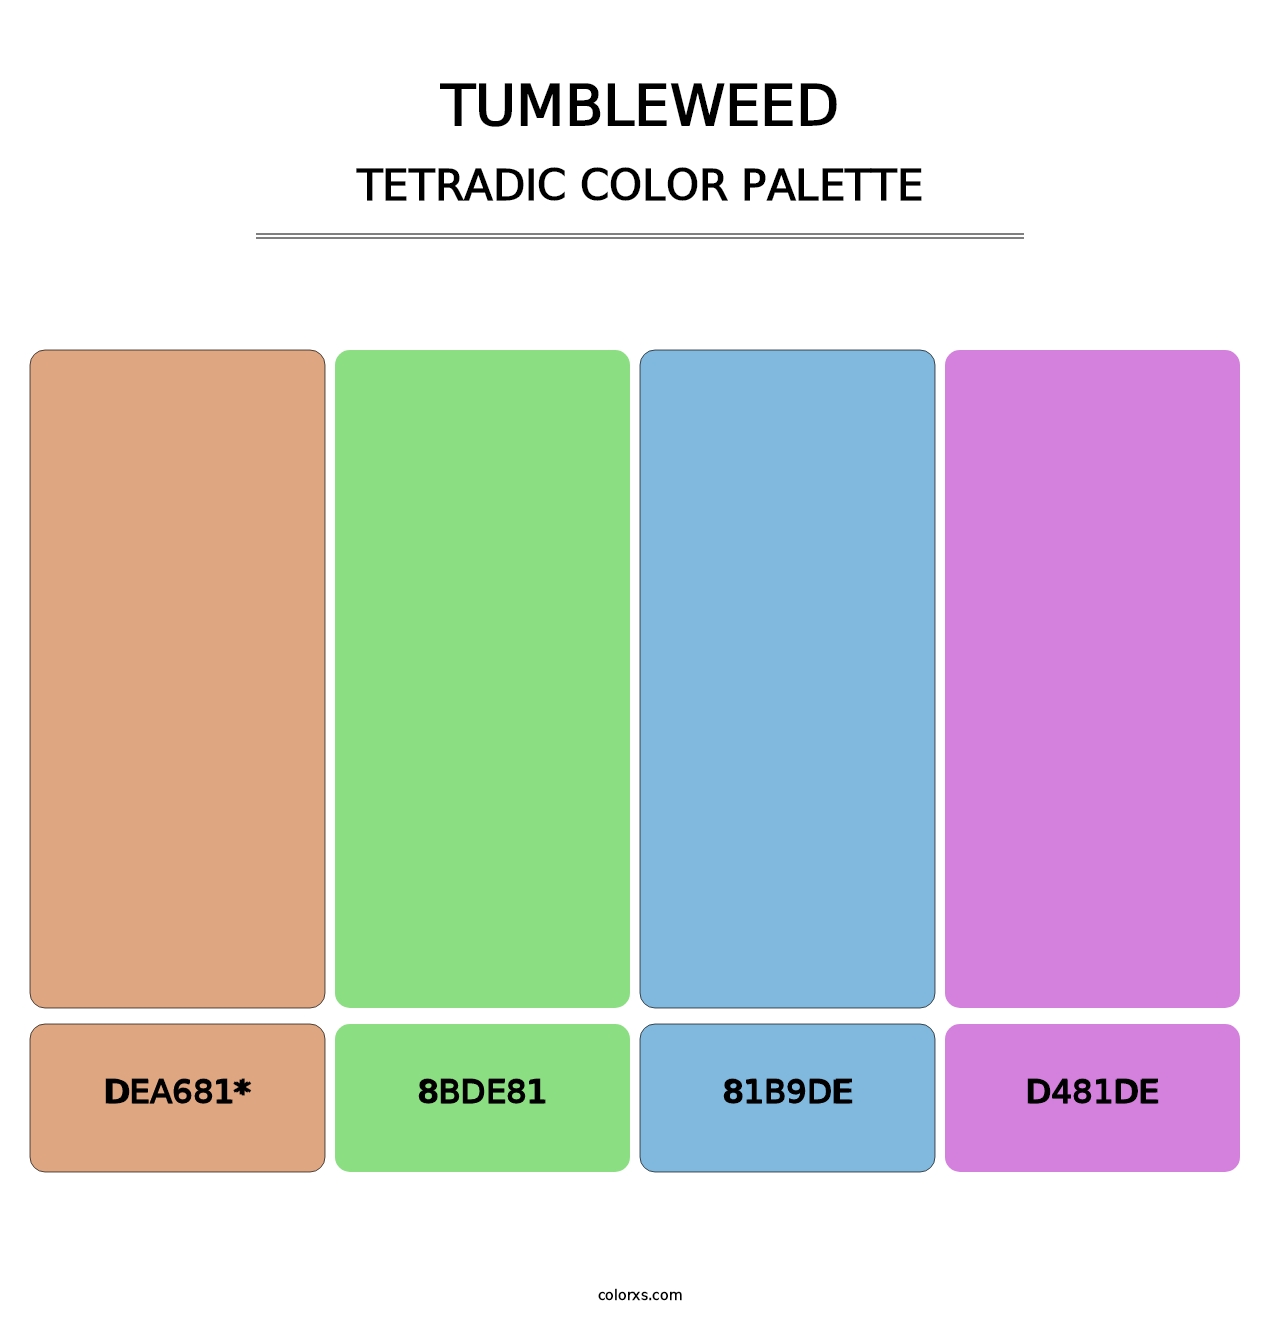 Tumbleweed - Tetradic Color Palette